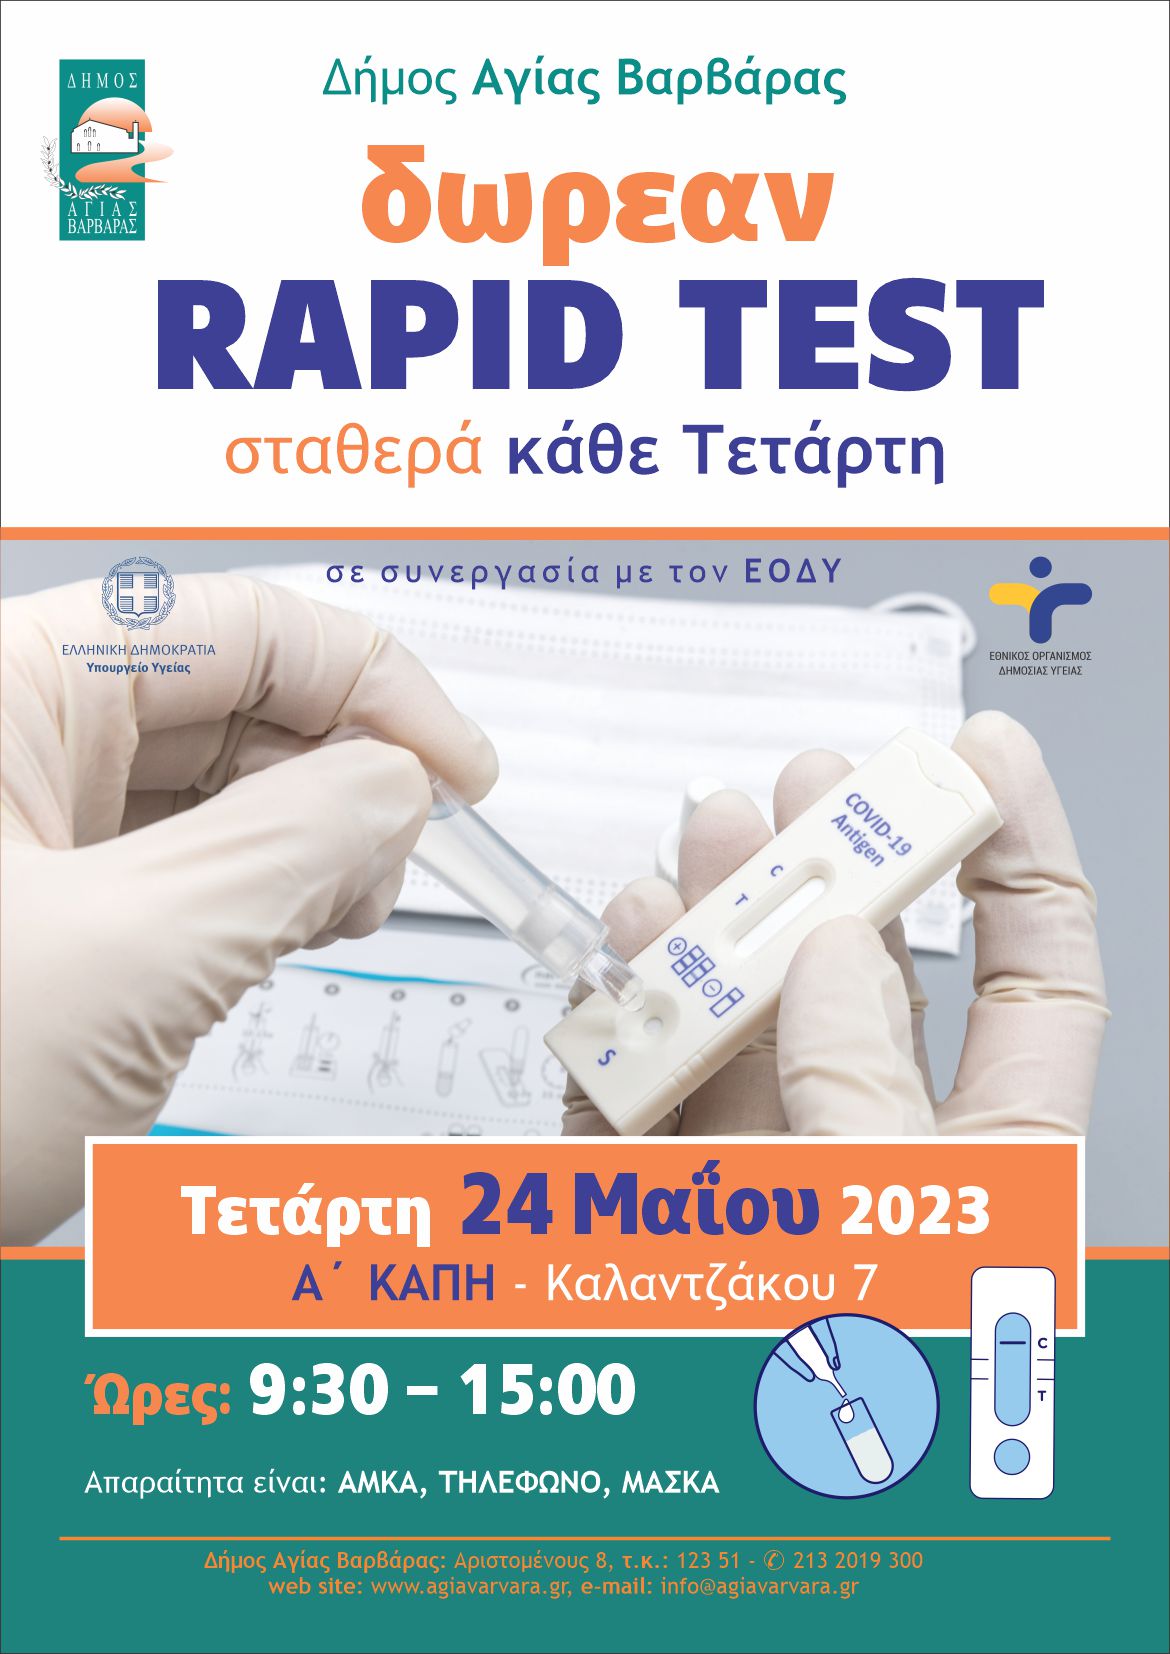 Rapid Test Αφίσα Α3 1 1